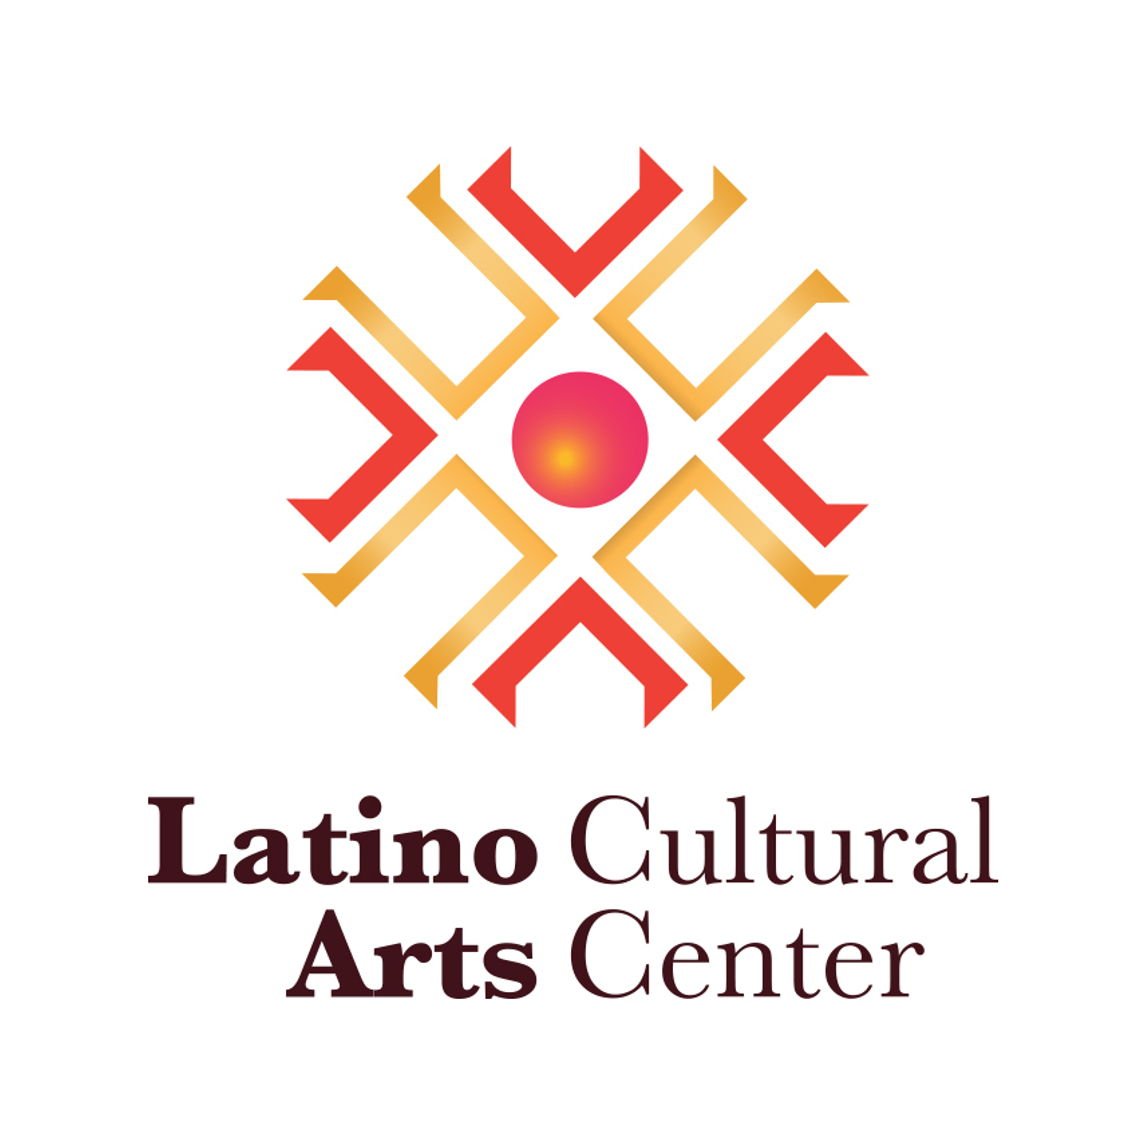 Latino Cultural Arts Center Logo.jpeg